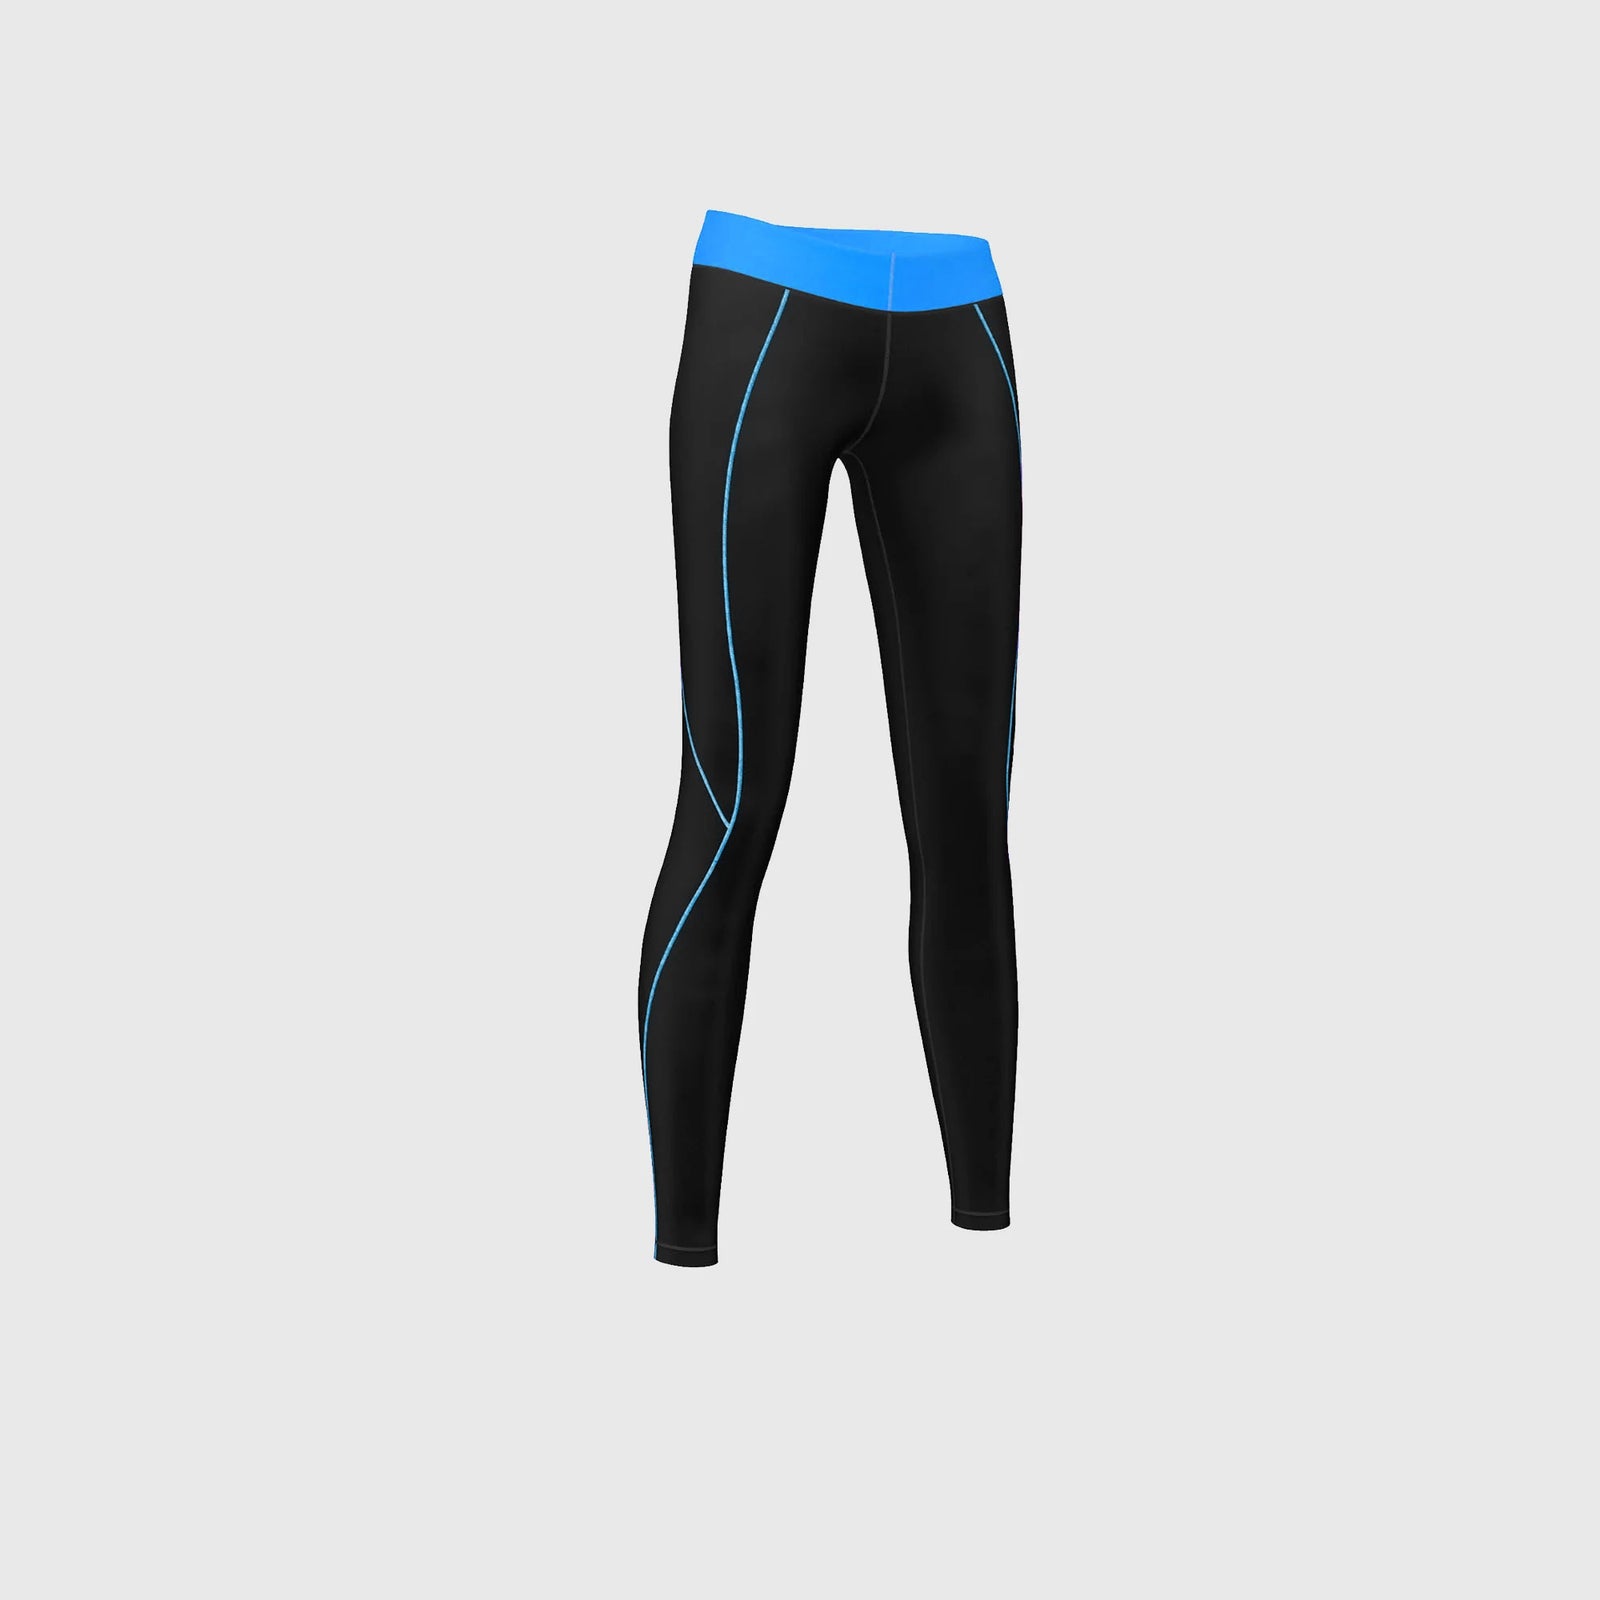 Shop All - Elastique Athletics  Compression leggings women